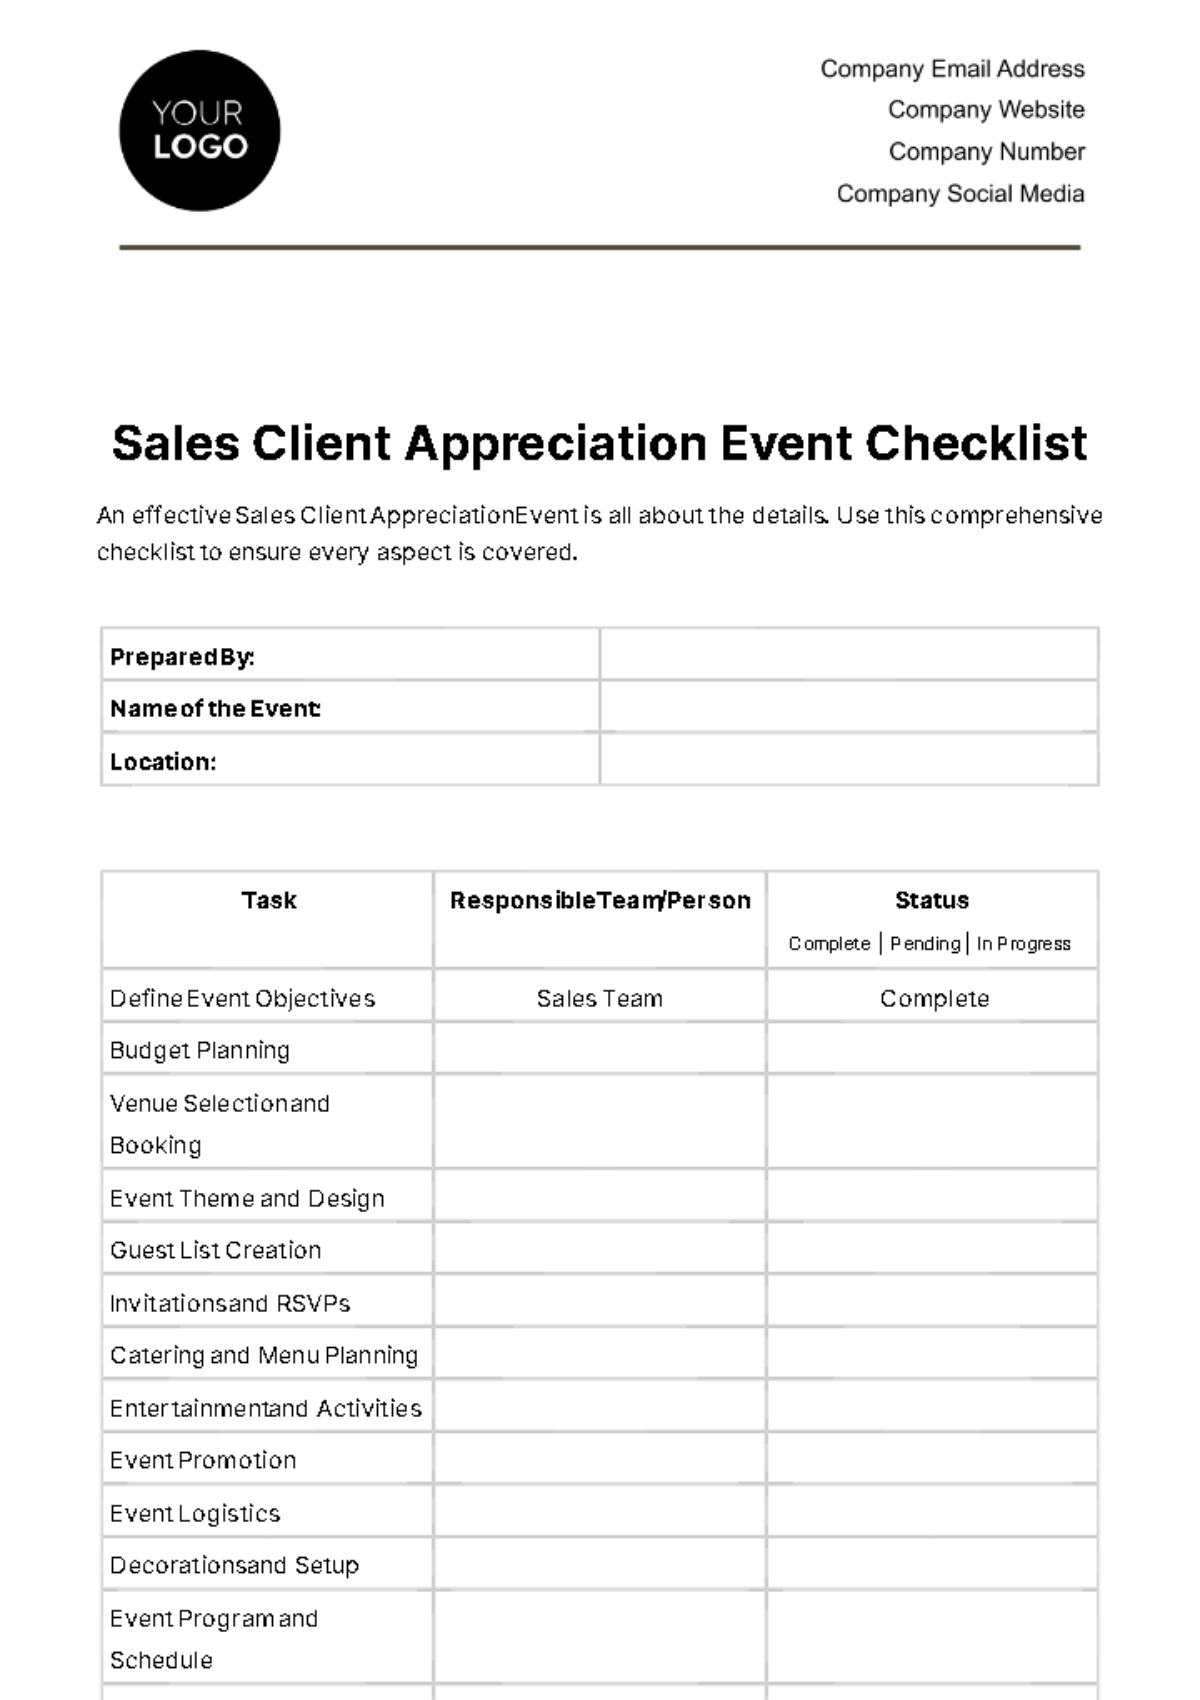 Free Sales Client Appreciation Event Checklist Template